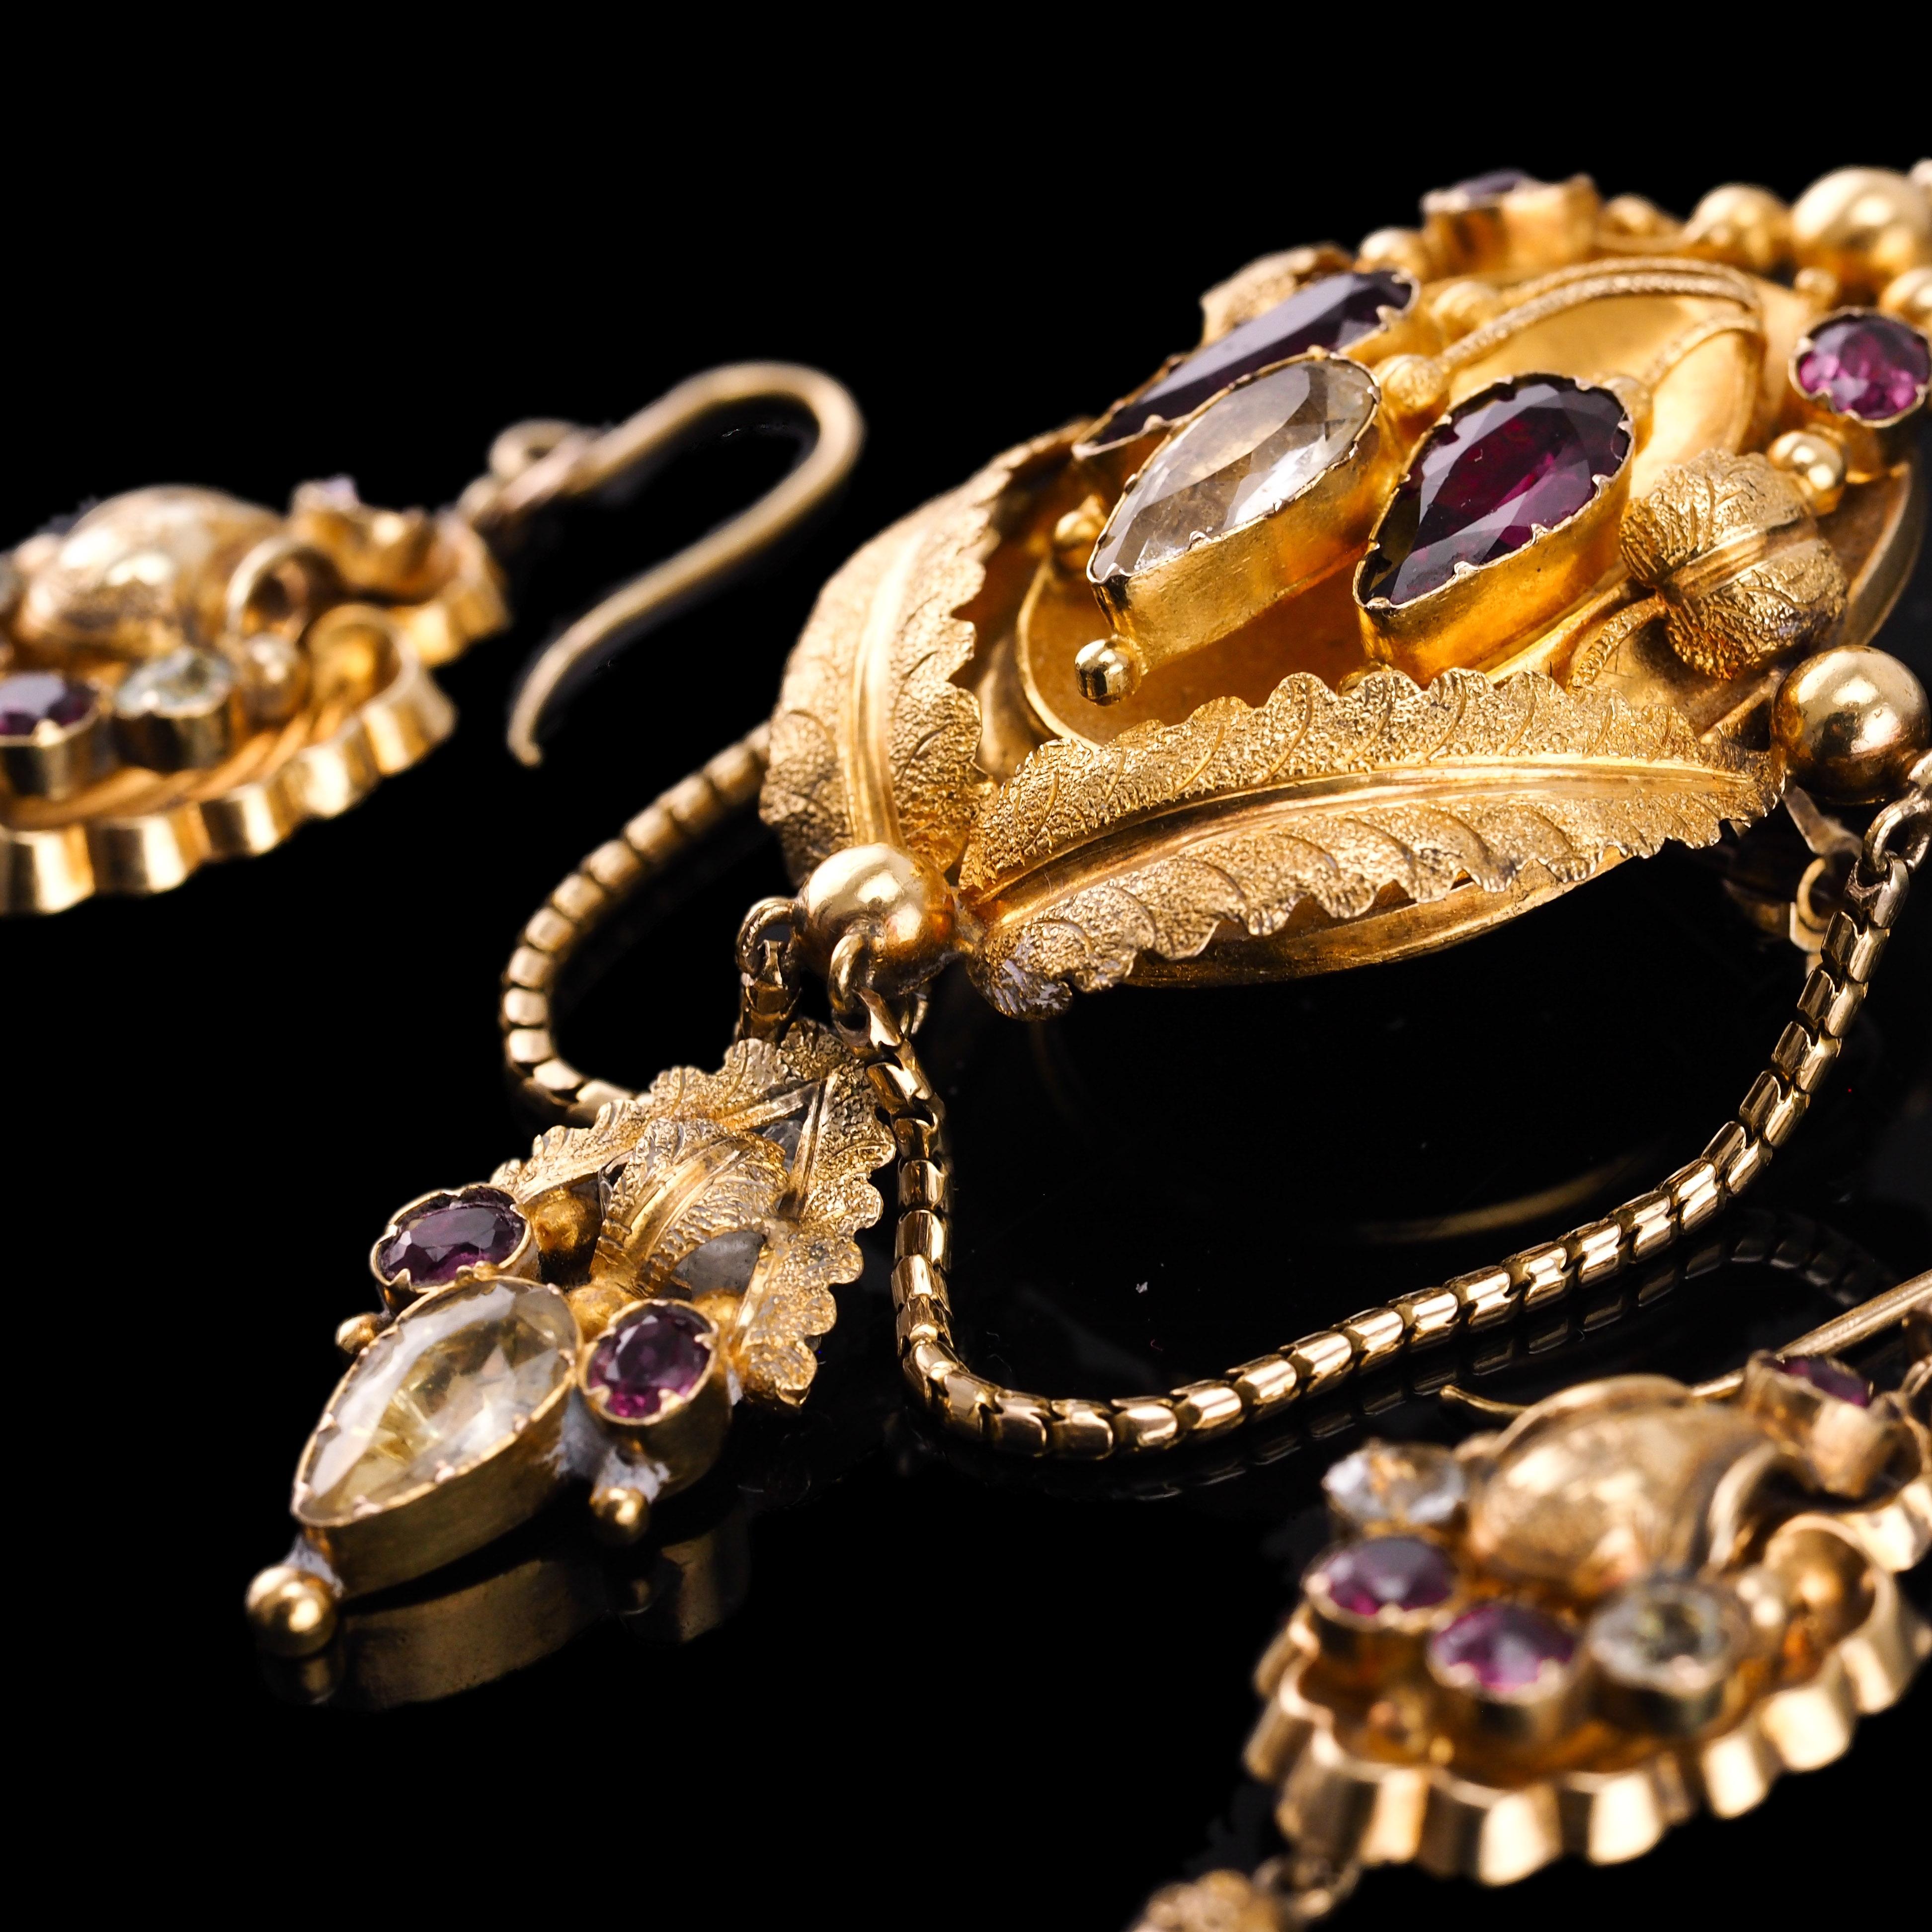 Antique 18K Gold Brooch Pendant & Earrings Garnet & Chrysoberyl - c.1870 4